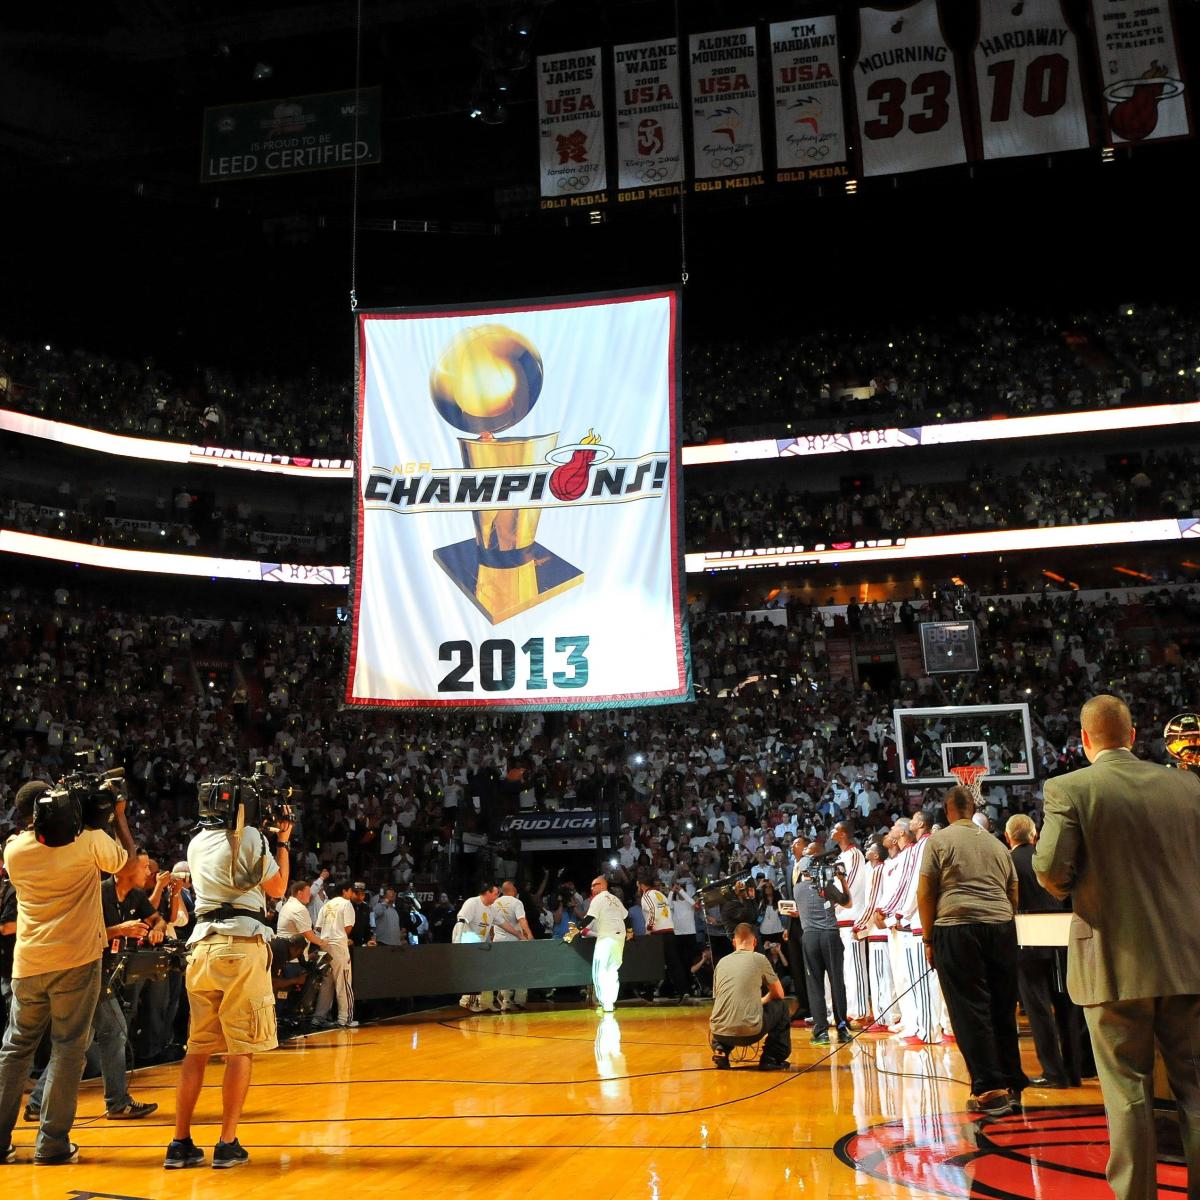 Miami Heat NBA championship ring ceremony